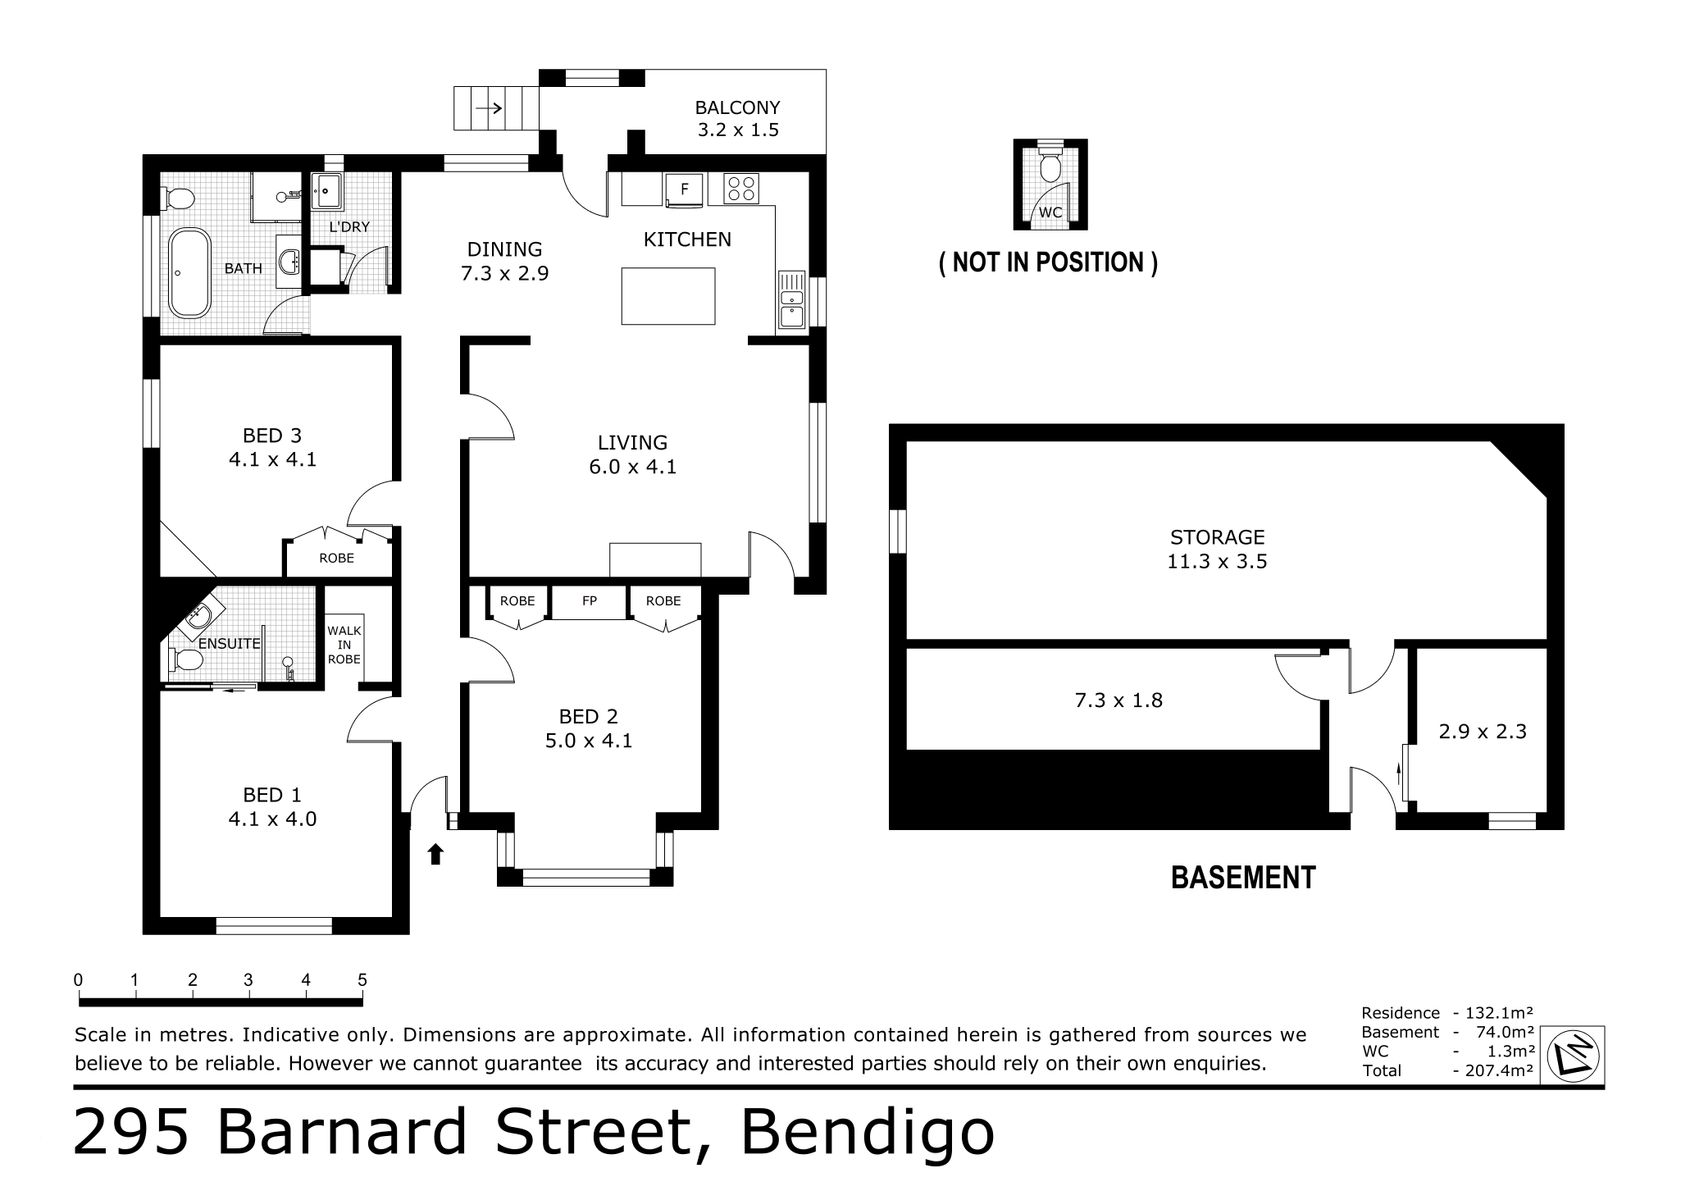 295 Barnard Street Bendigo HiRes 1